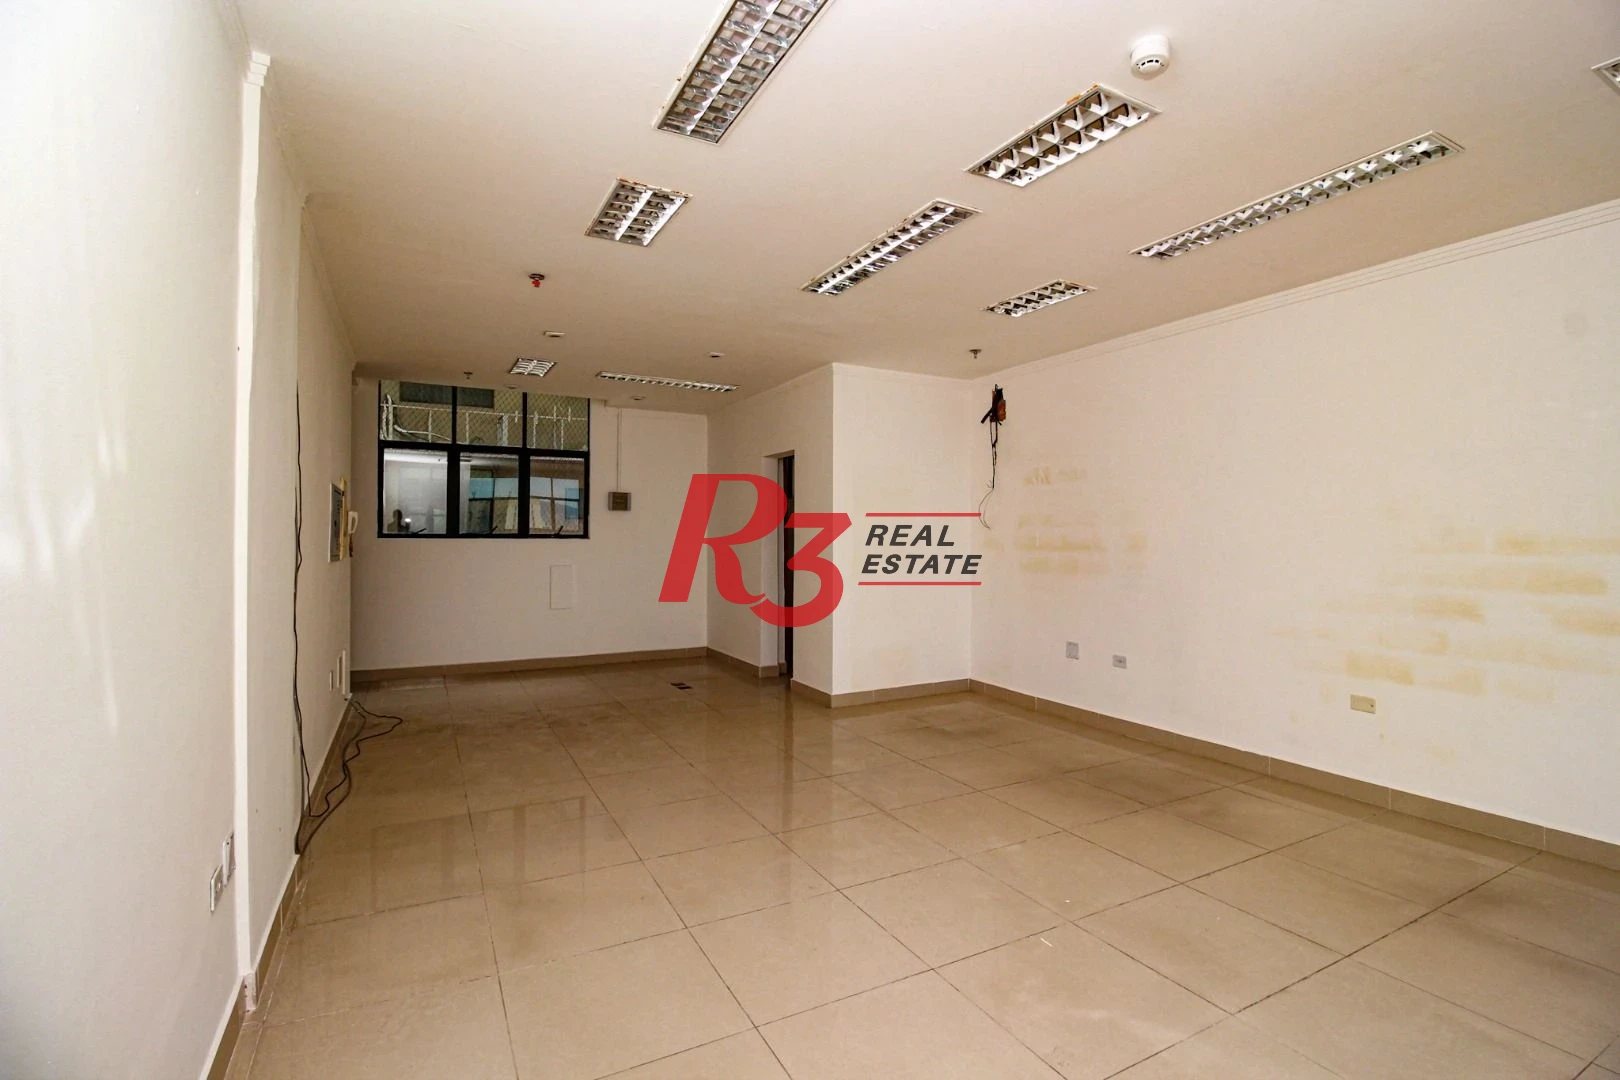 Sala para alugar, 65 m² - Centro - Santos/SP